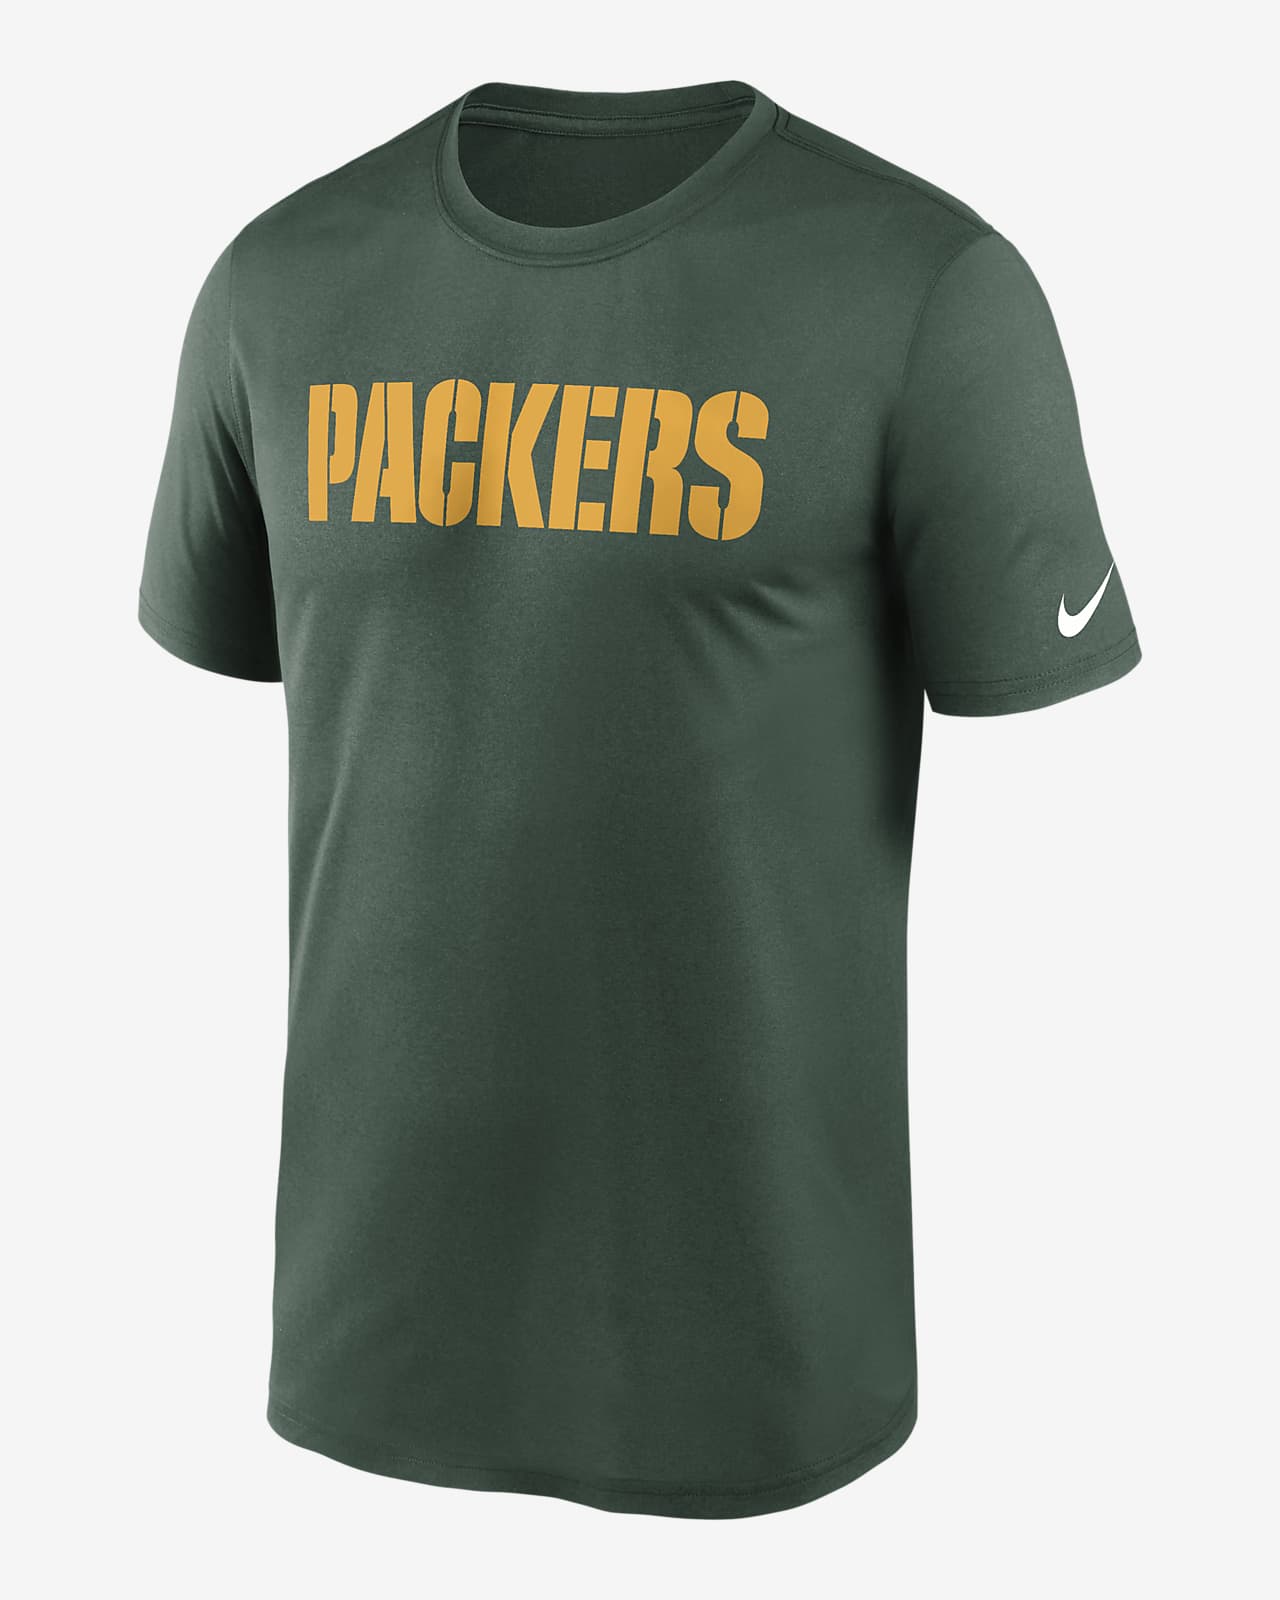 Nike Dri-FIT Wordmark Legend (NFL Green Bay Packers) Men's T-Shirt